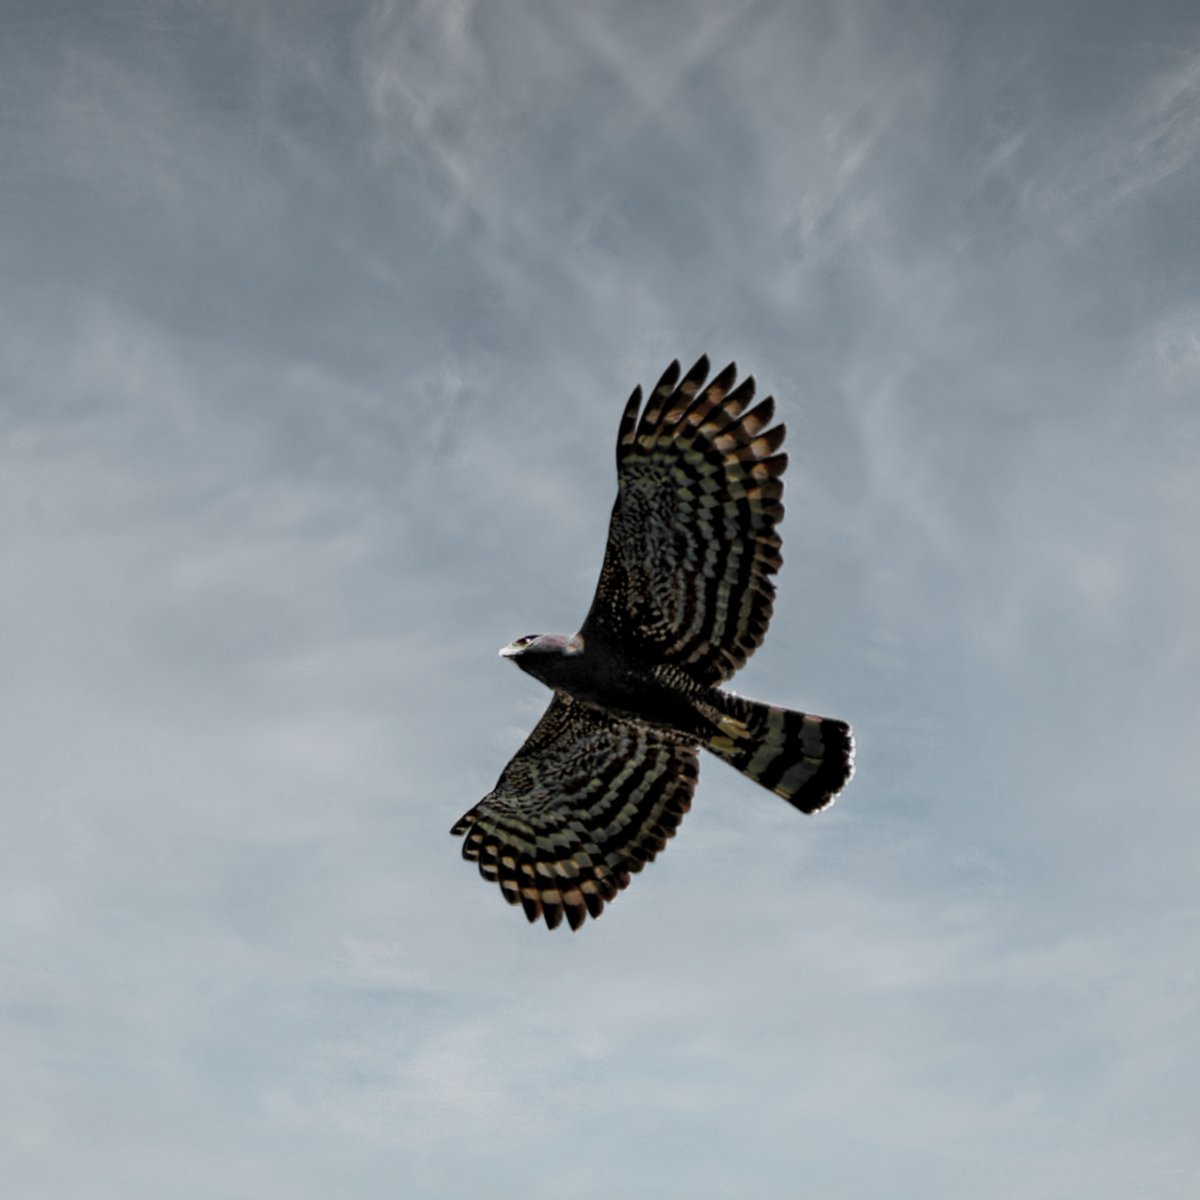 Black Hawk-Eagle (Spizaetus tyrannus) #CostaRica Jan’23 #IndiAves #birdphotography #BirdsOfTwitter #birdwatching #NaturePhotography #wildlifephotography #TwitterNatureCommunity #twitterbirds #BirdTwitter #birds #BirdsSeenIn2023 #ThePhotoHour